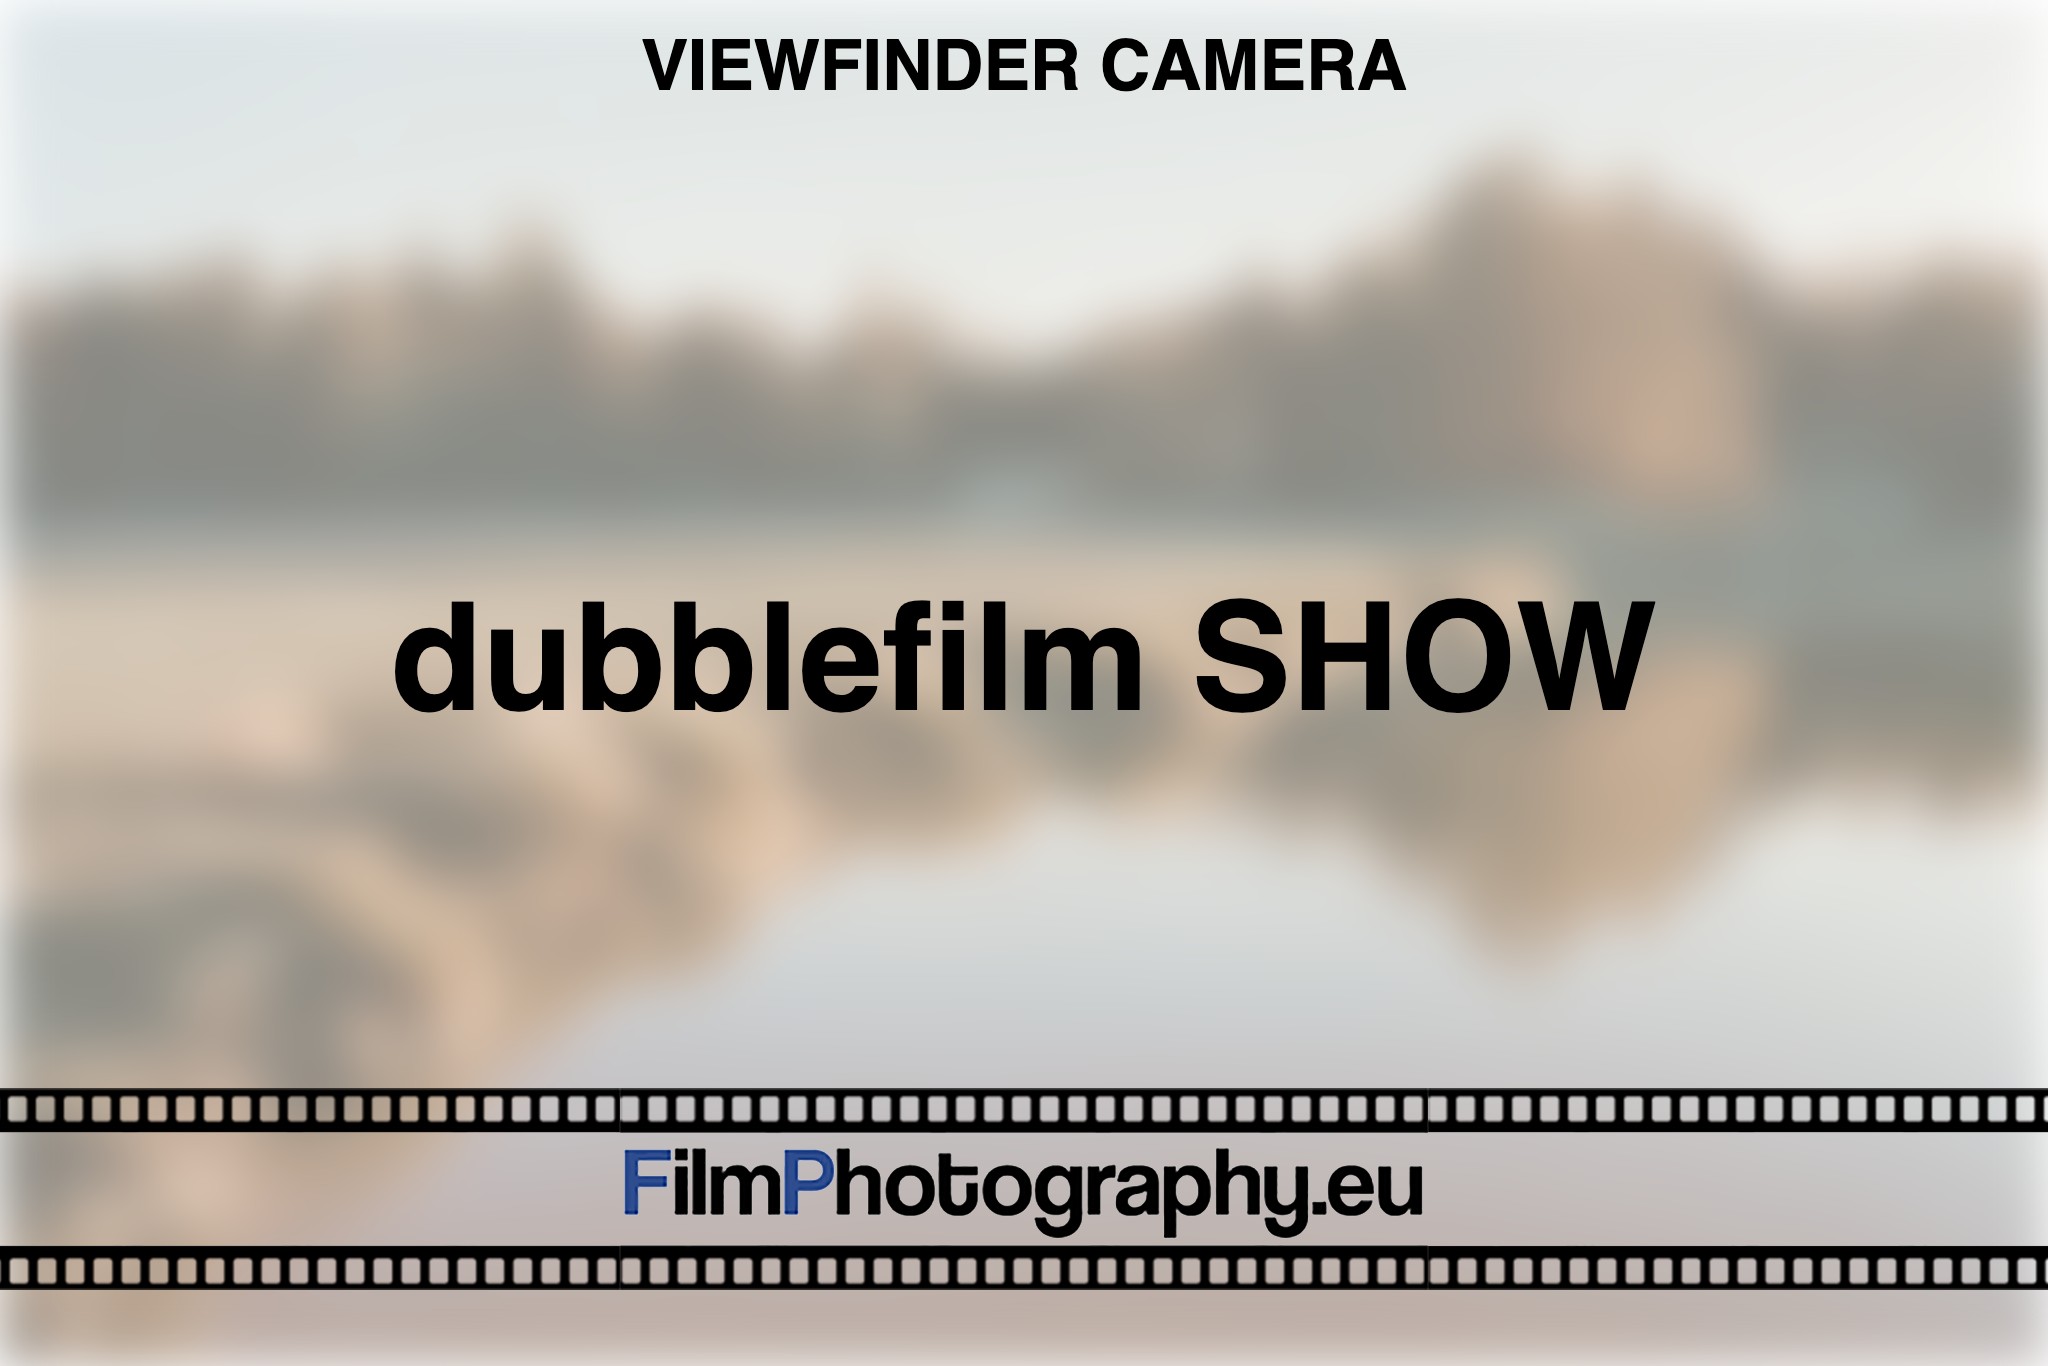 dubblefilm-show-viewfinder-camera-bnv